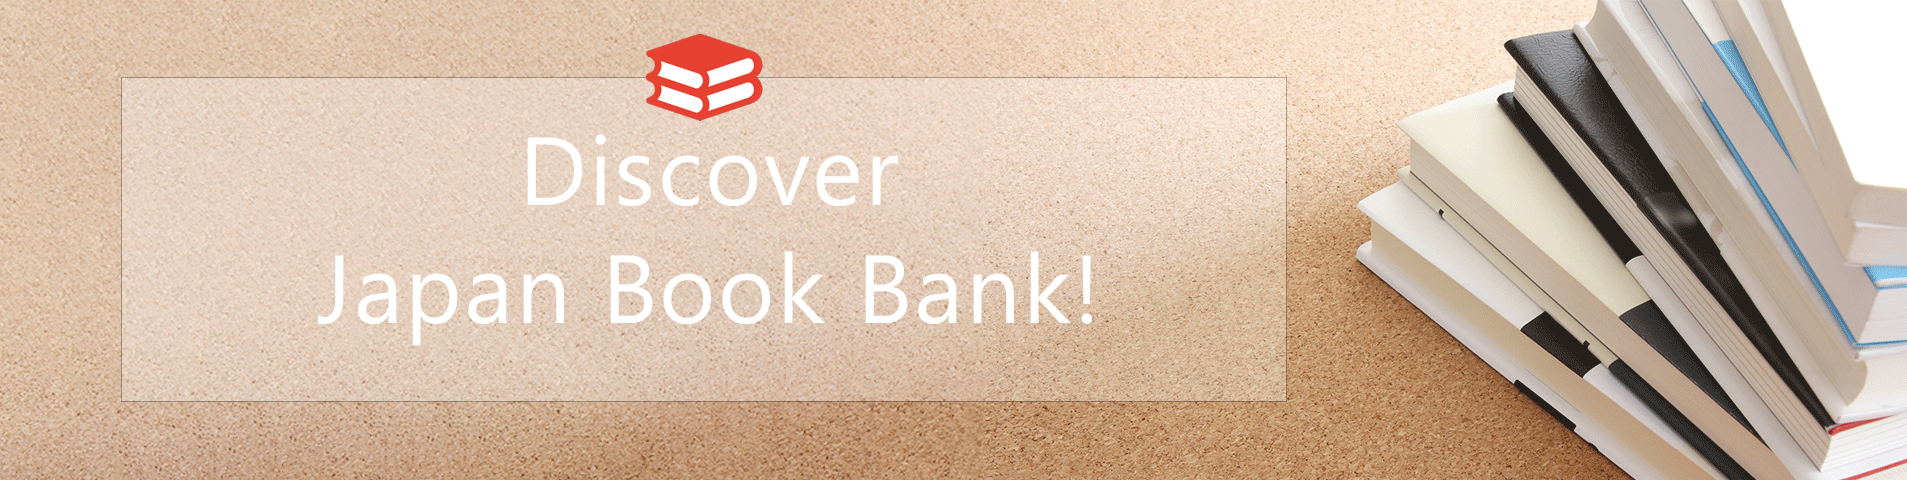 Discover Japan Book Bank!